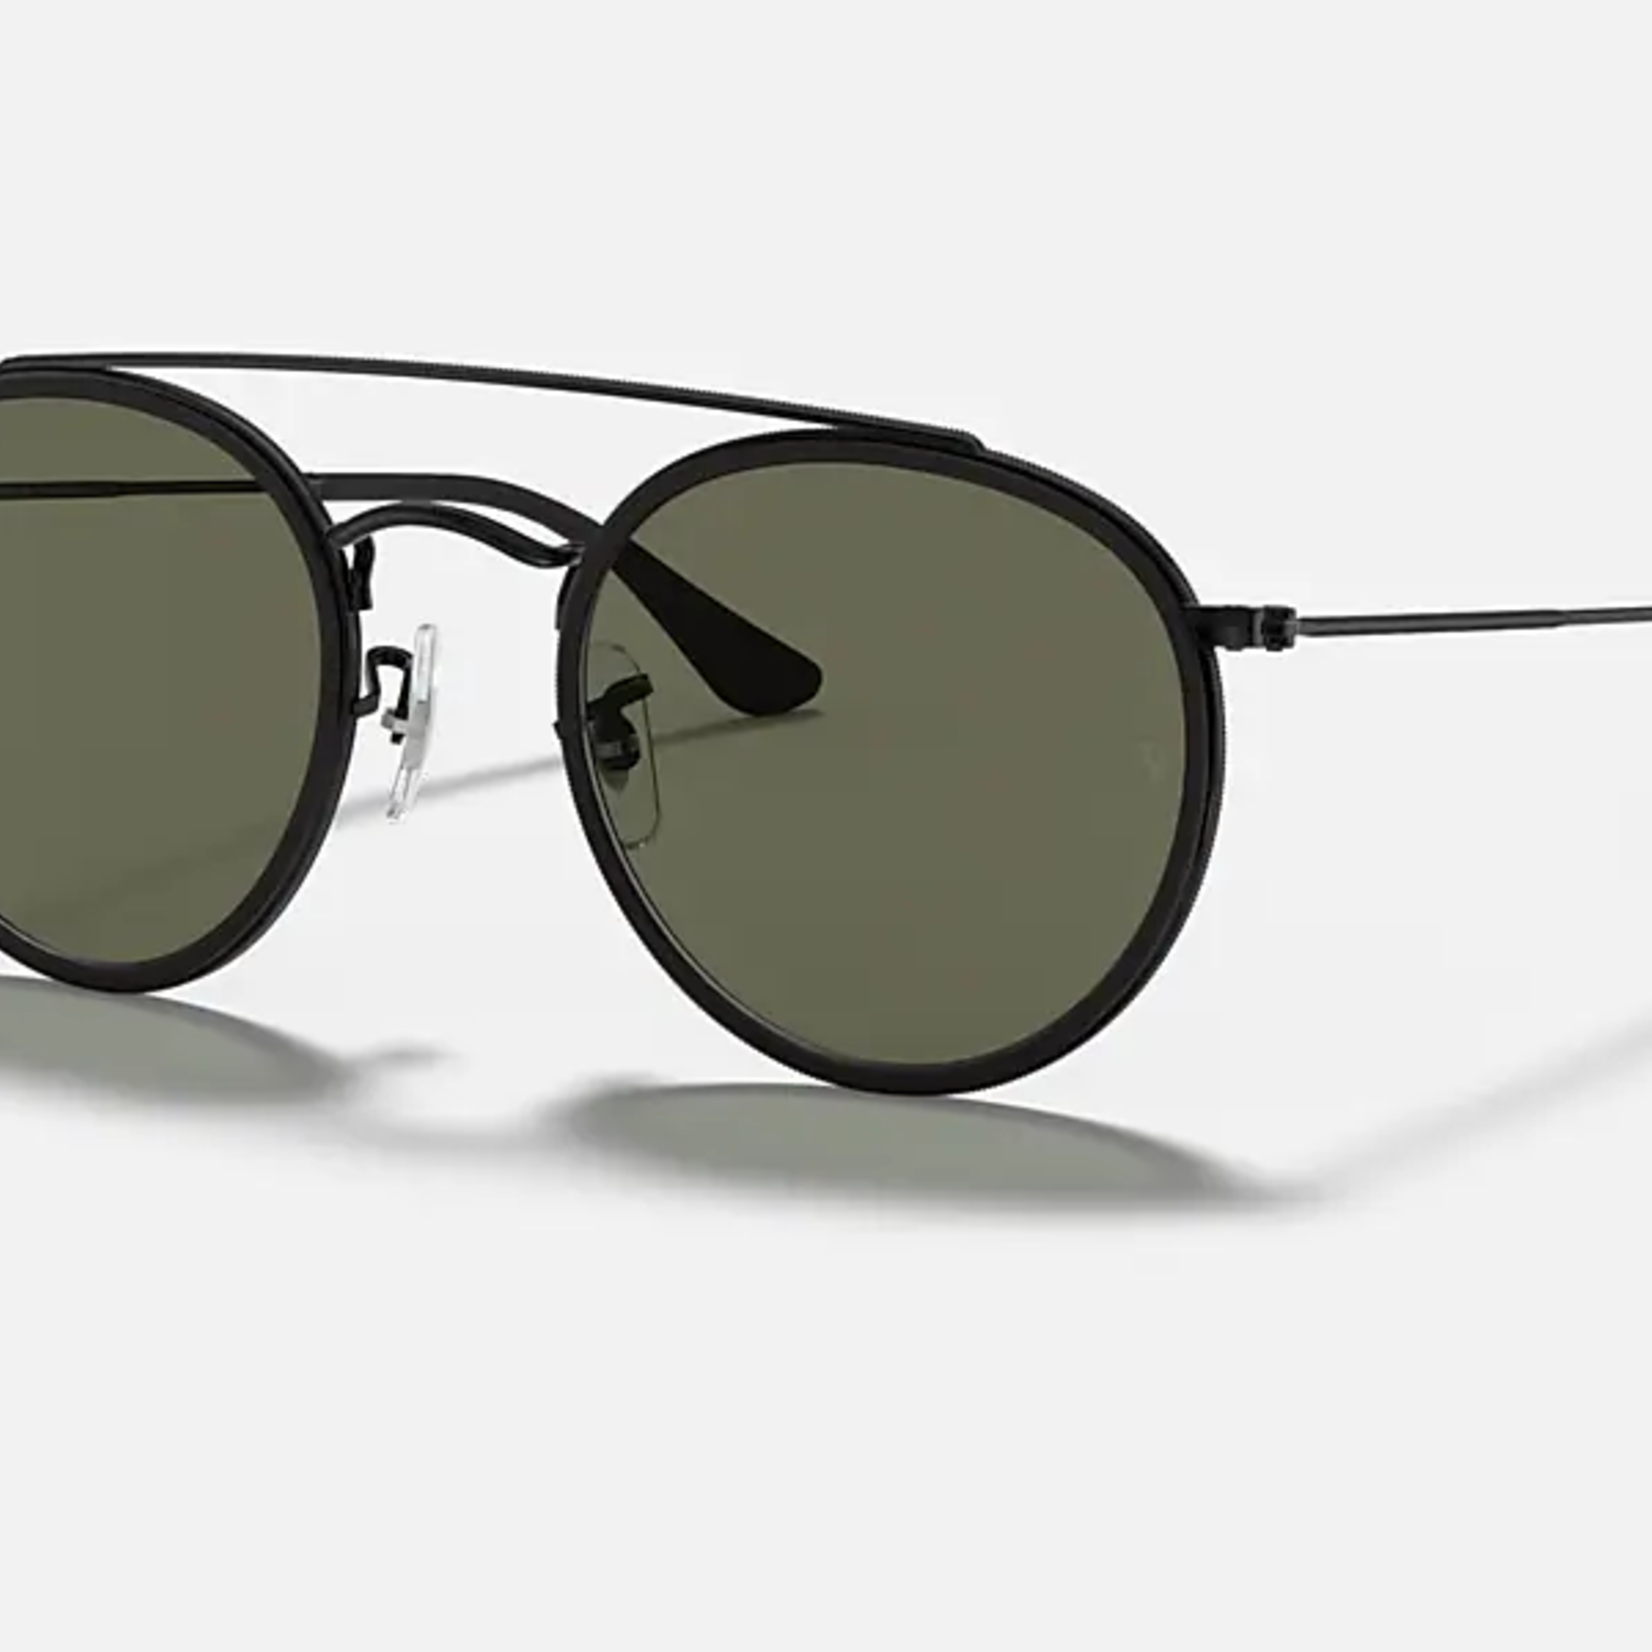 Ray-Ban Ray-Ban Sunglasses, Round Double Bridge, Blk, G-15 Grn Polarized, 51